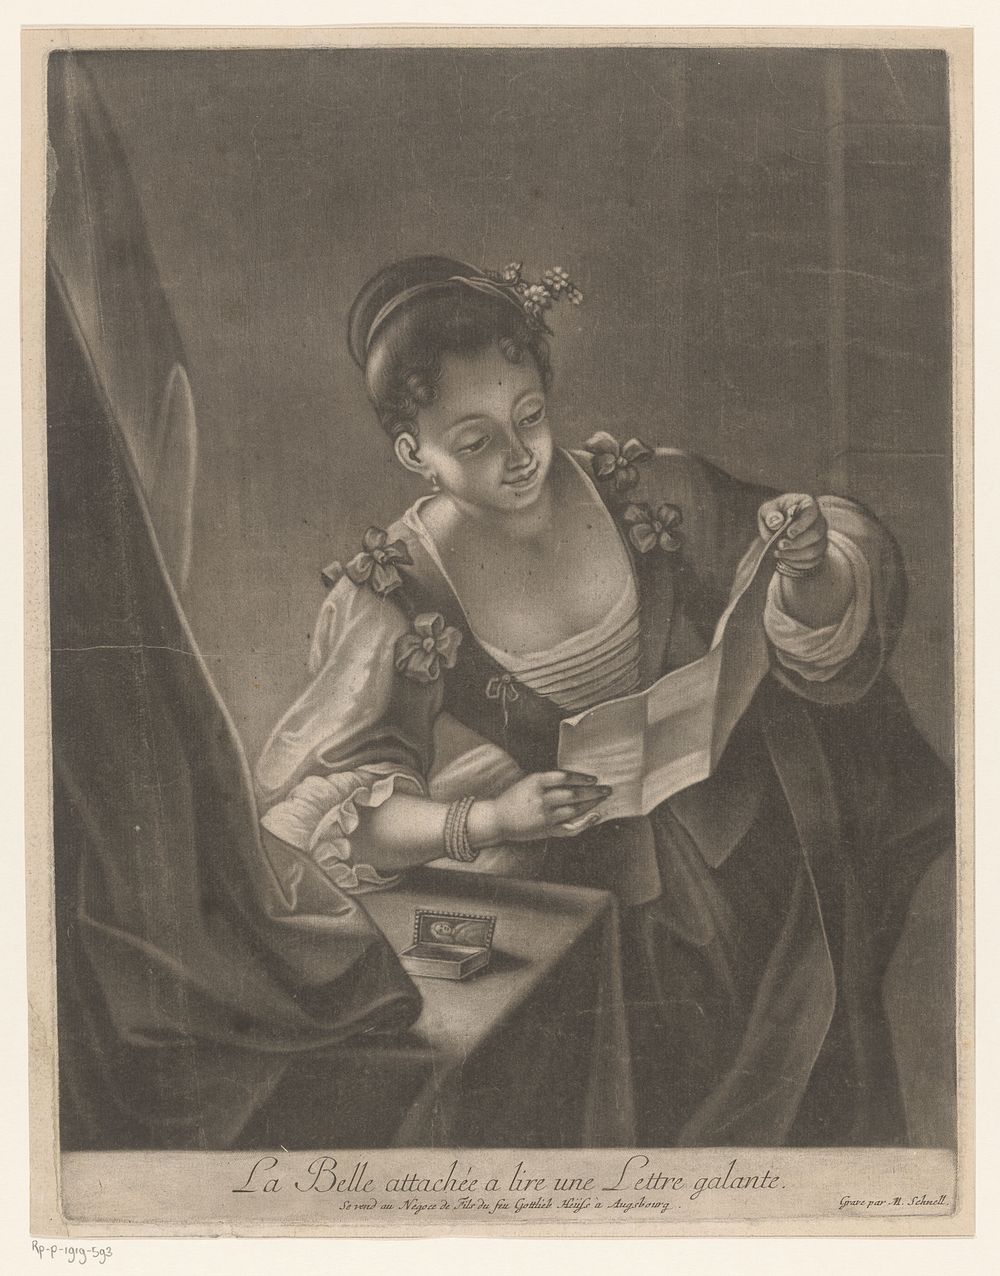 Brieflezende jonge vrouw (1731 - 1740) by Michael Schnell and Gottlieb Heiss I